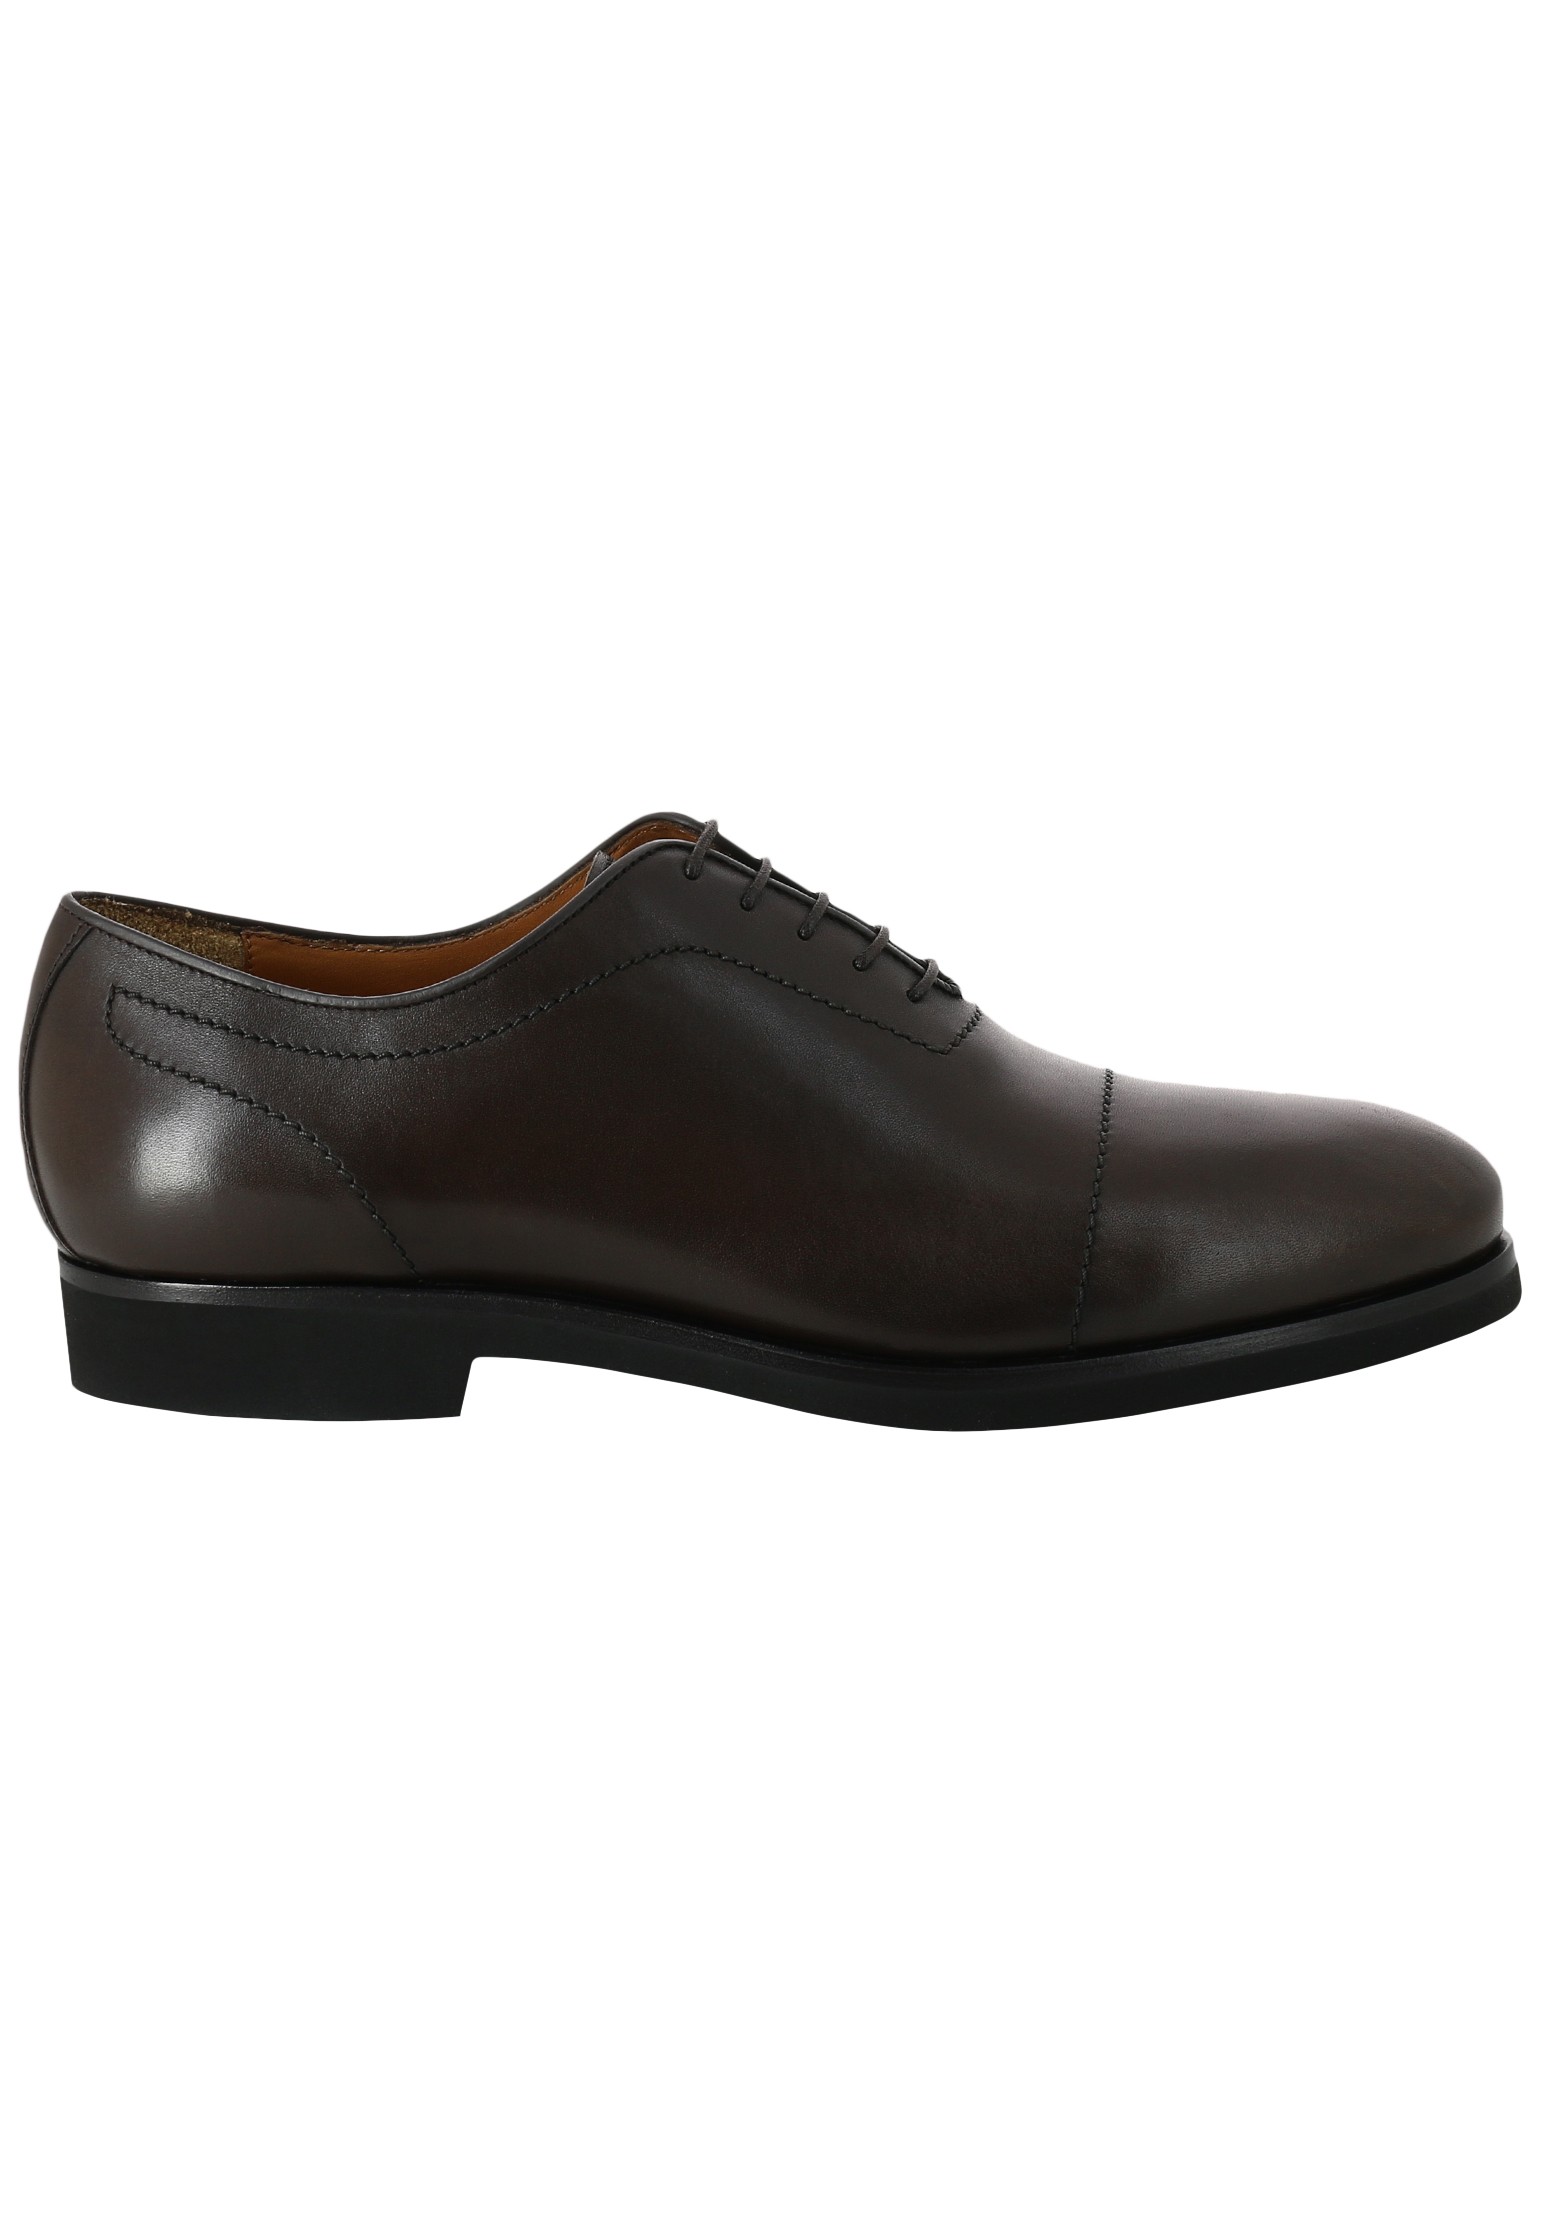 Туфли мужские CASTELLO D'ORO 128898 коричневые 7 UK